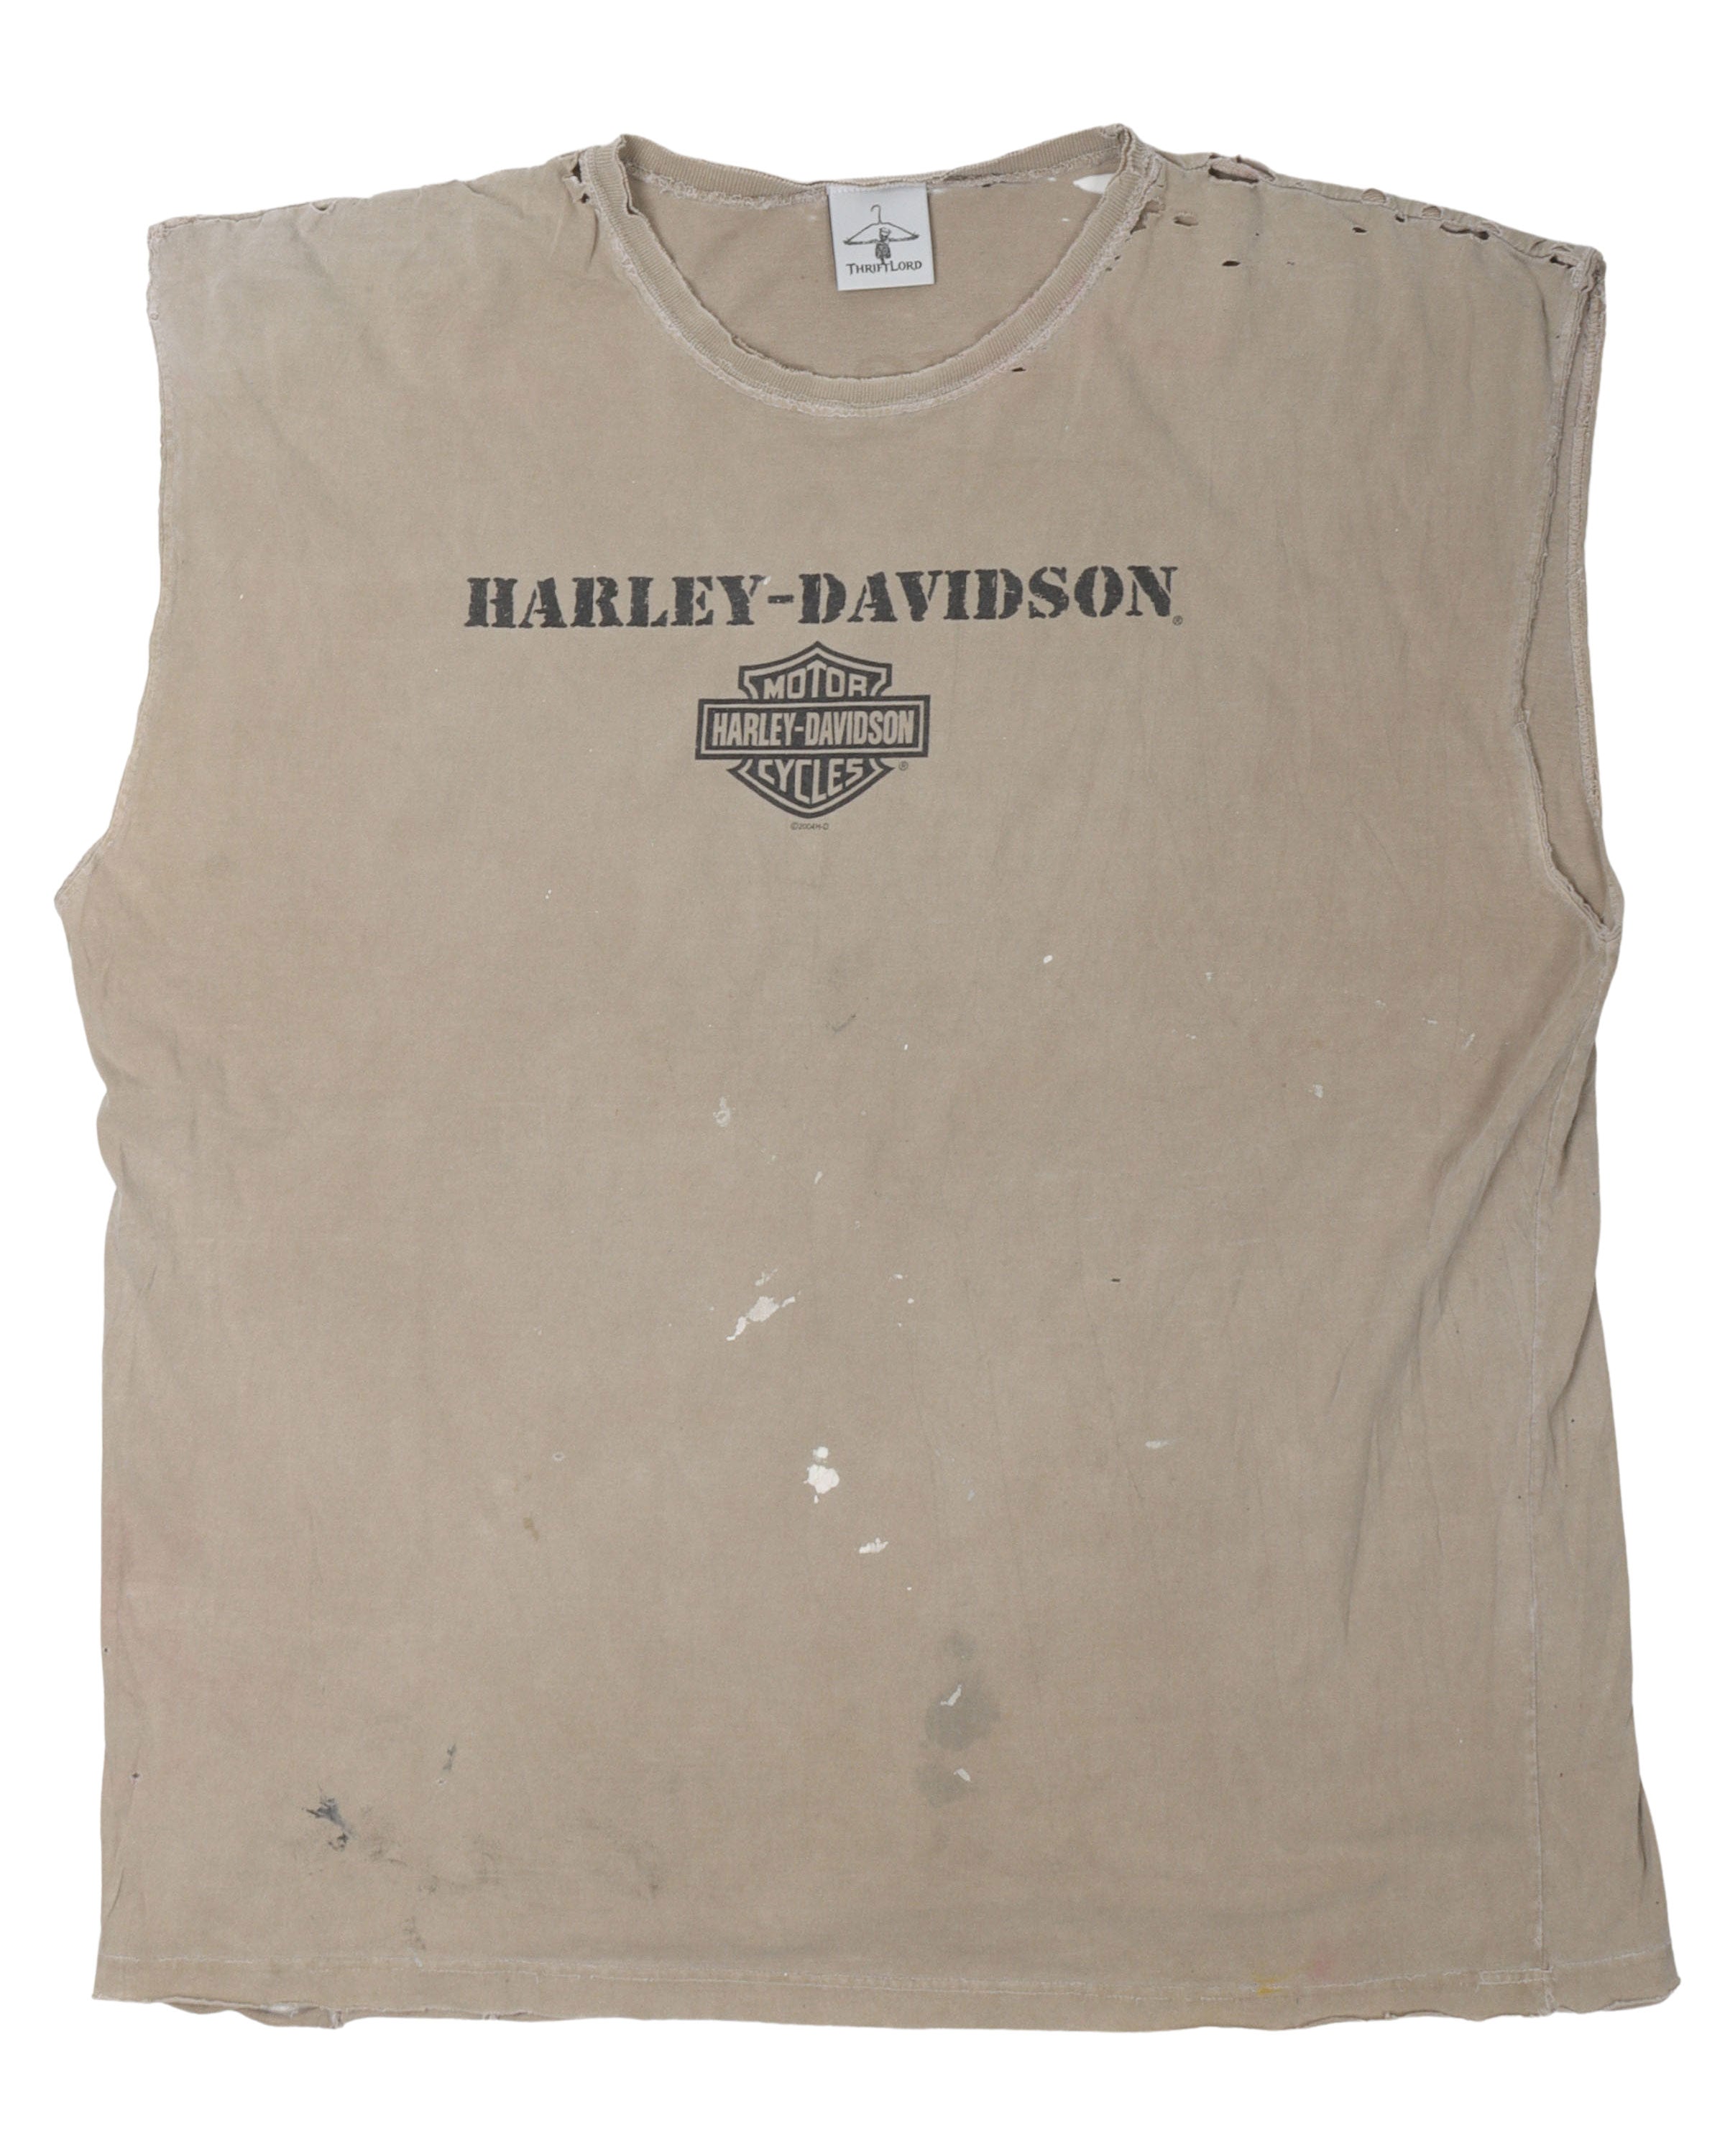 Harley Davidson Cut Sleeves T-Shirt